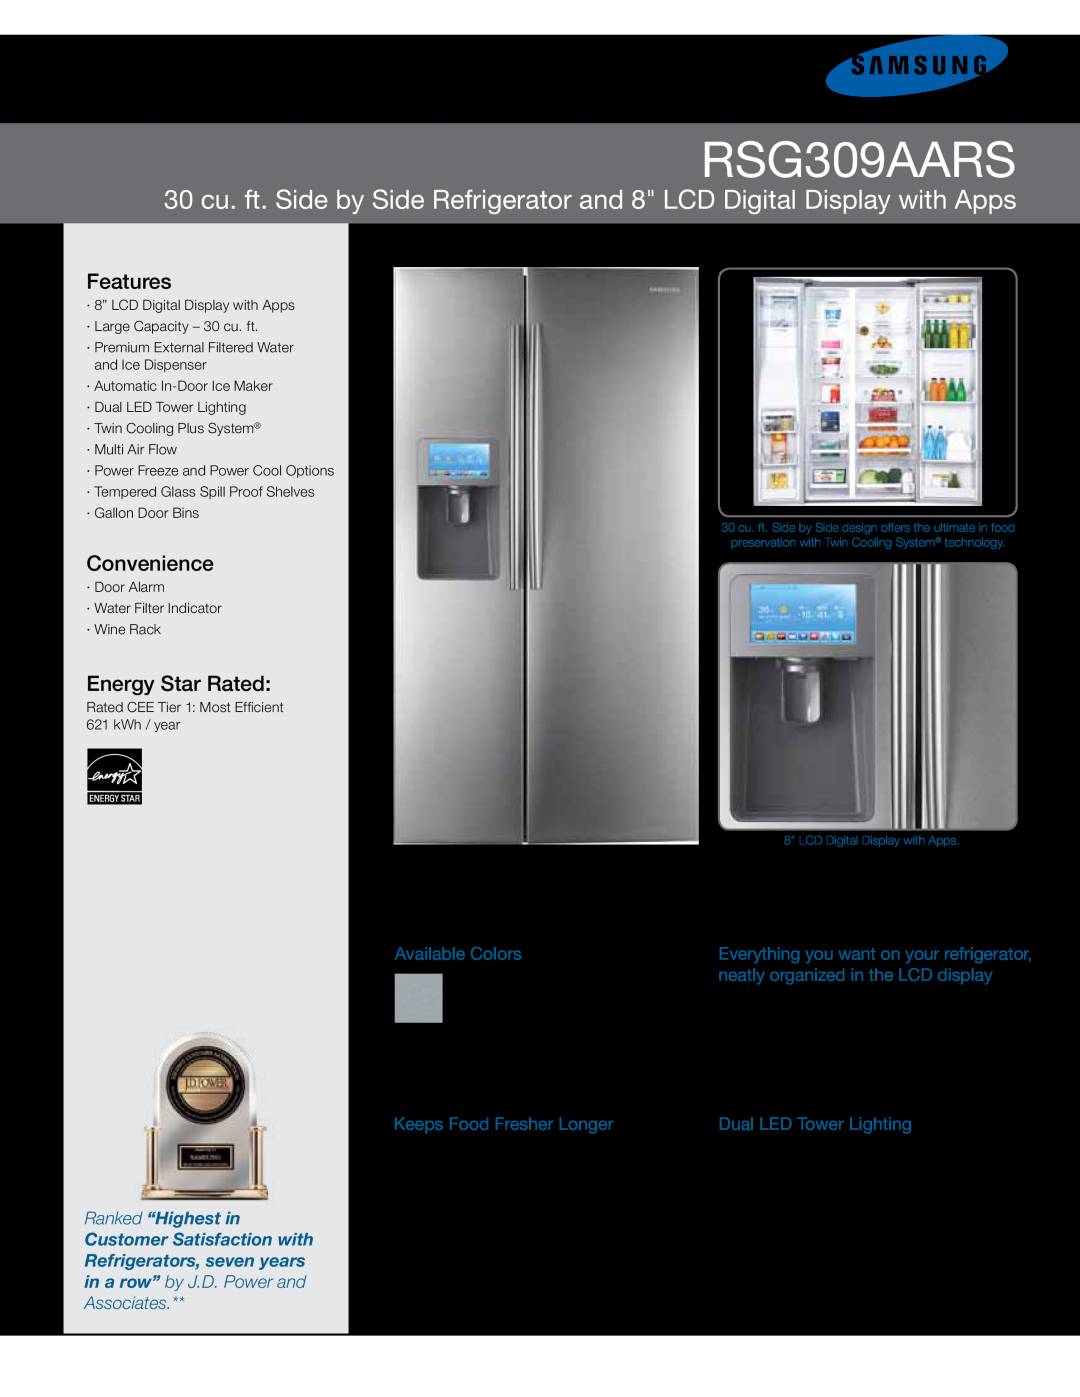 Samsung RSG309 user manual Refrigerator, Imagine the possibilities, Free Standing Appliance, English, Samsung, 2012.6.7 